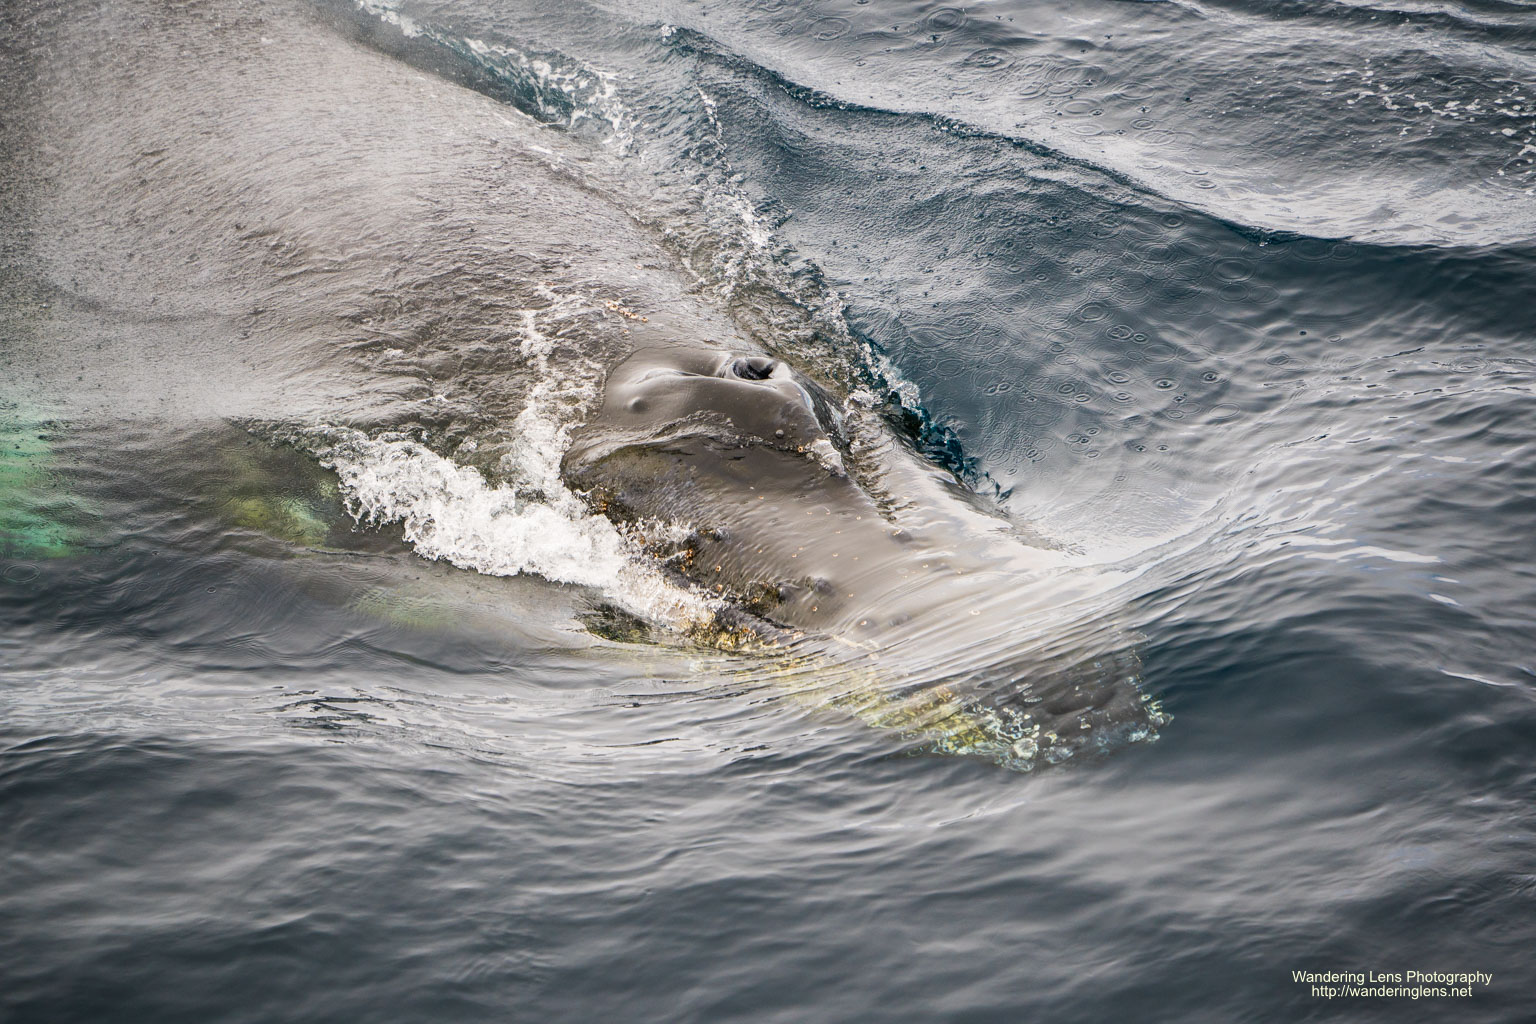 A humpback whale up close